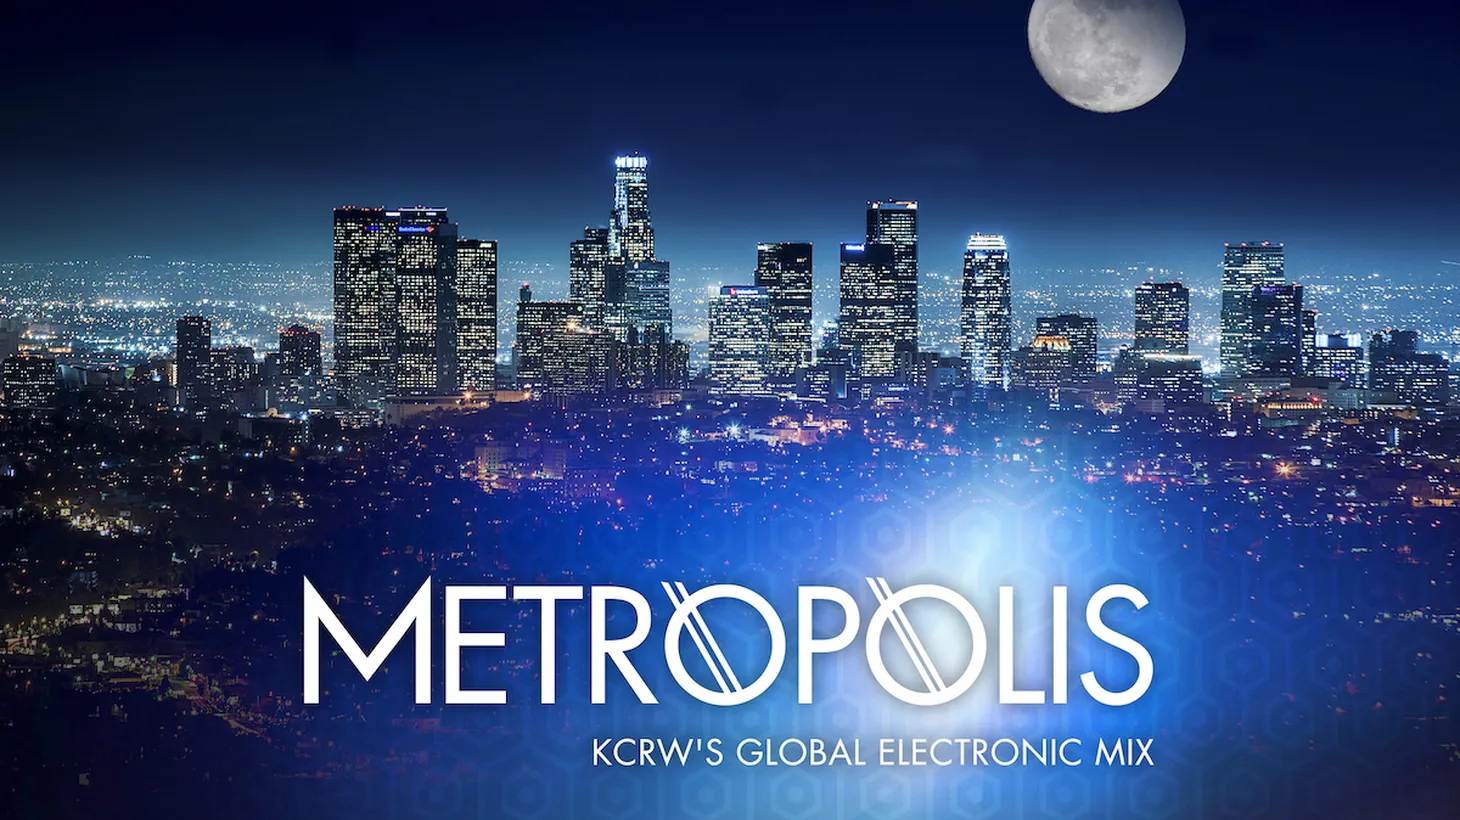 Metropolis playlist, January 15, 2022.